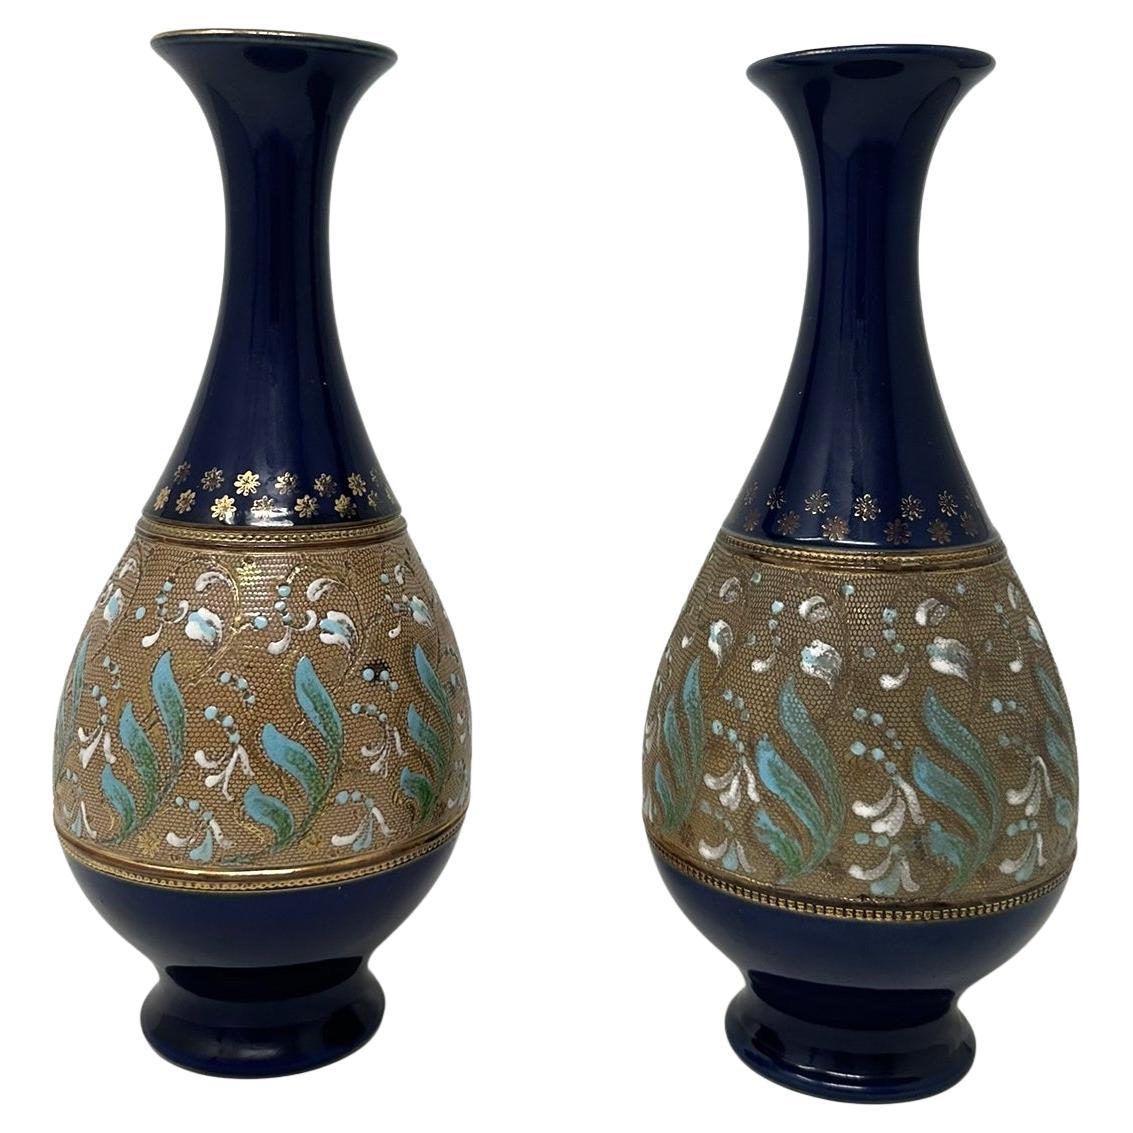 Antikes Paar englisches Porzellan Royal Doulton Keramik Art Nouveau-Vasen und Urnen aus Porzellan